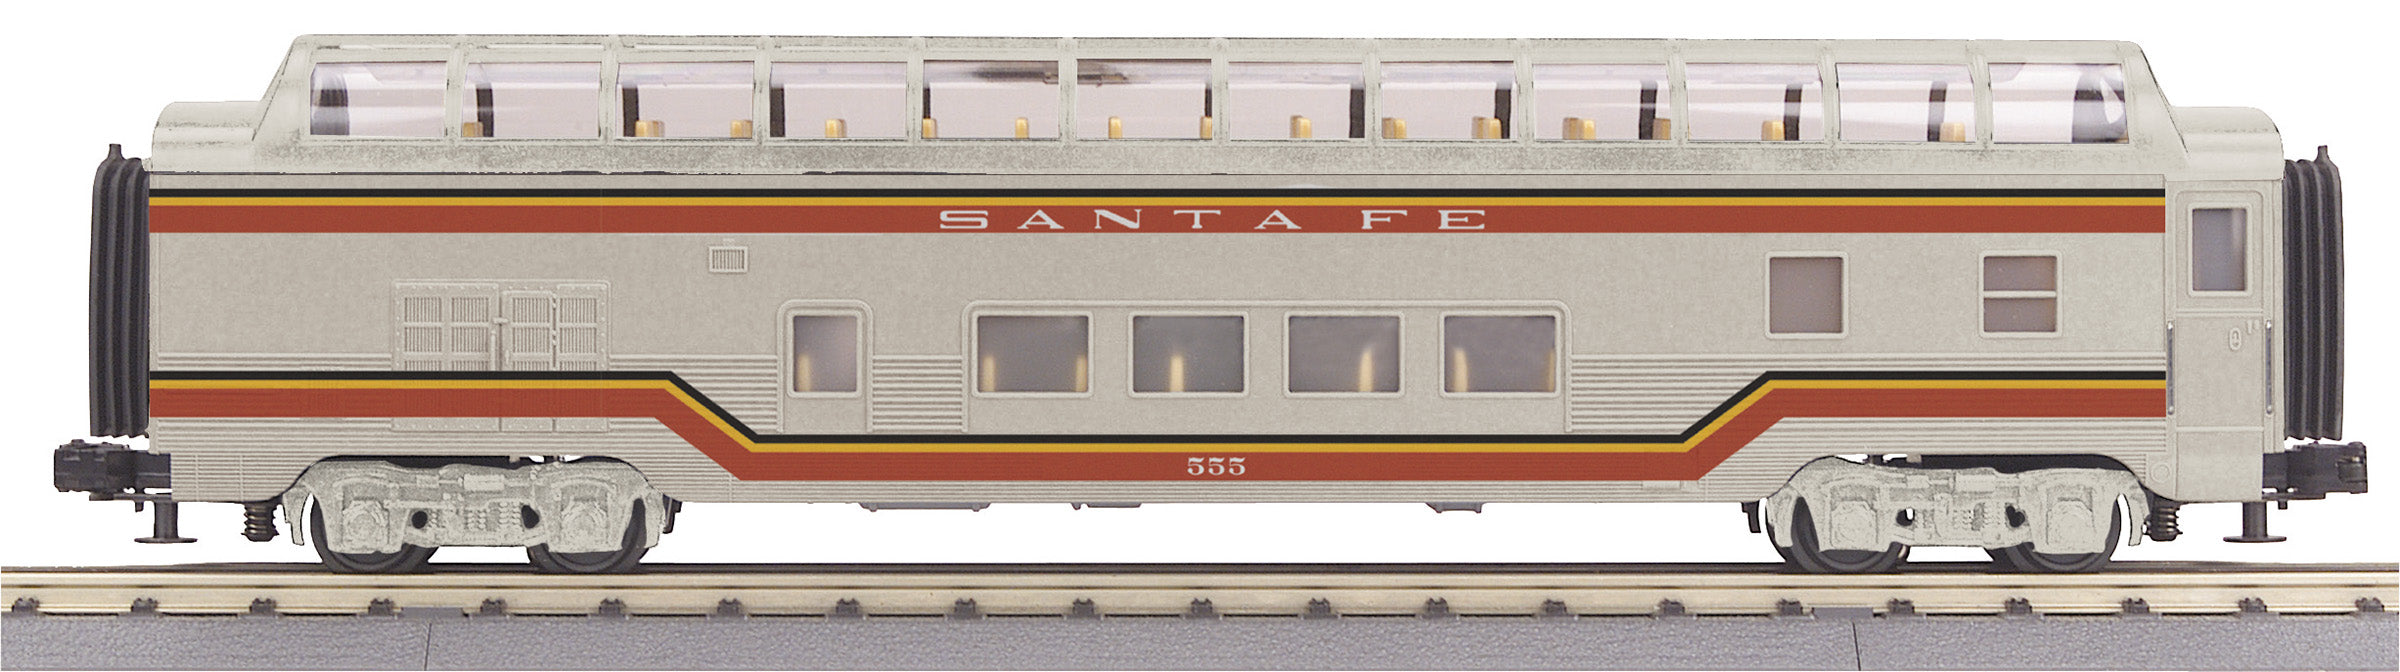 MTH 30-68243 - 60’ Streamlined Full-Length Vista Dome Car "Santa Fe" War Bonnet